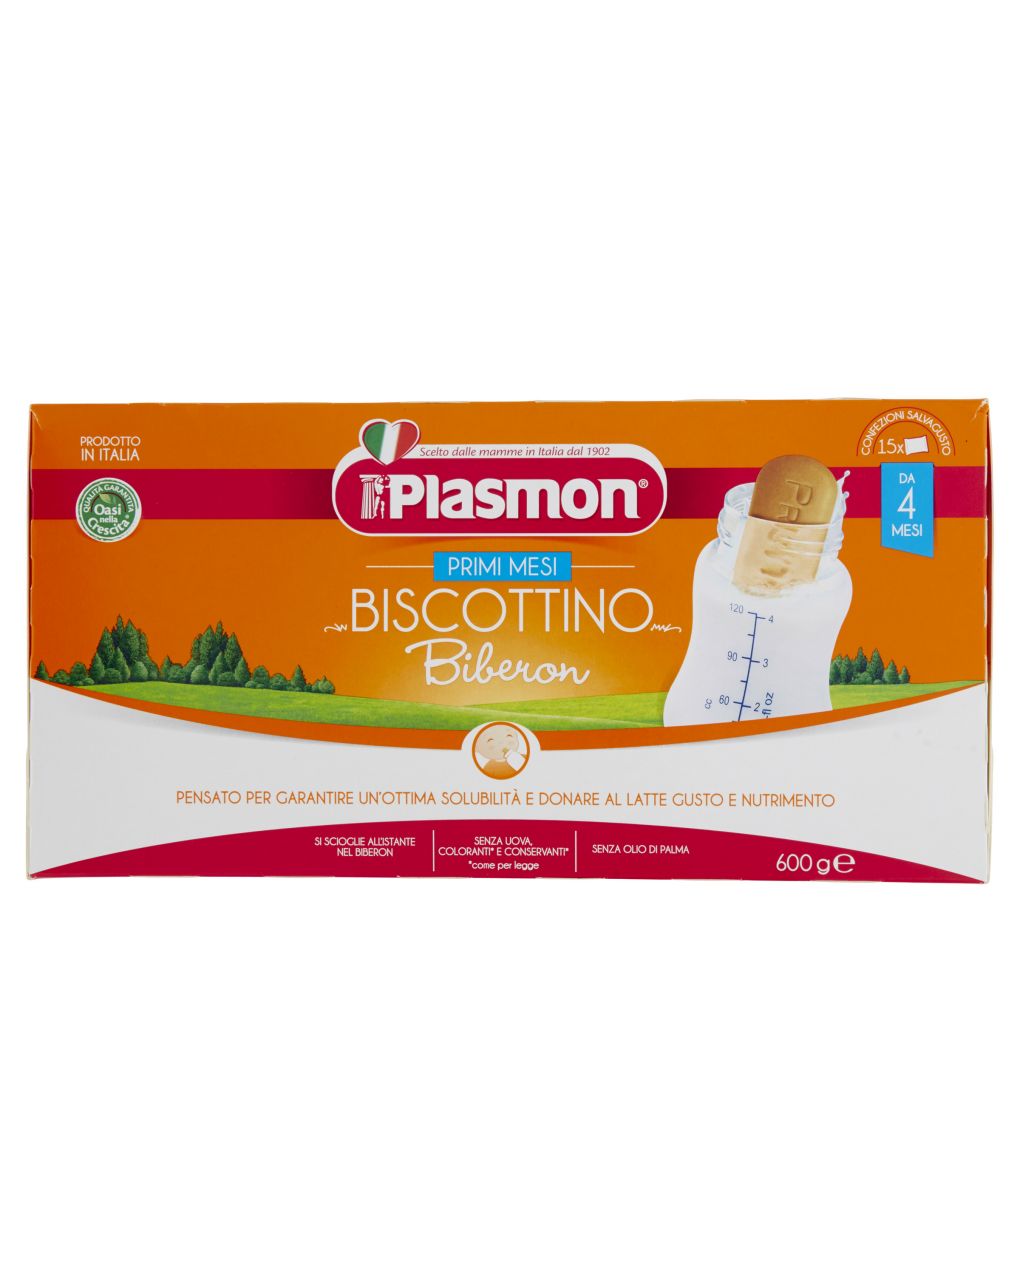 Plasmon - biscotto biberon primi mesi 600g